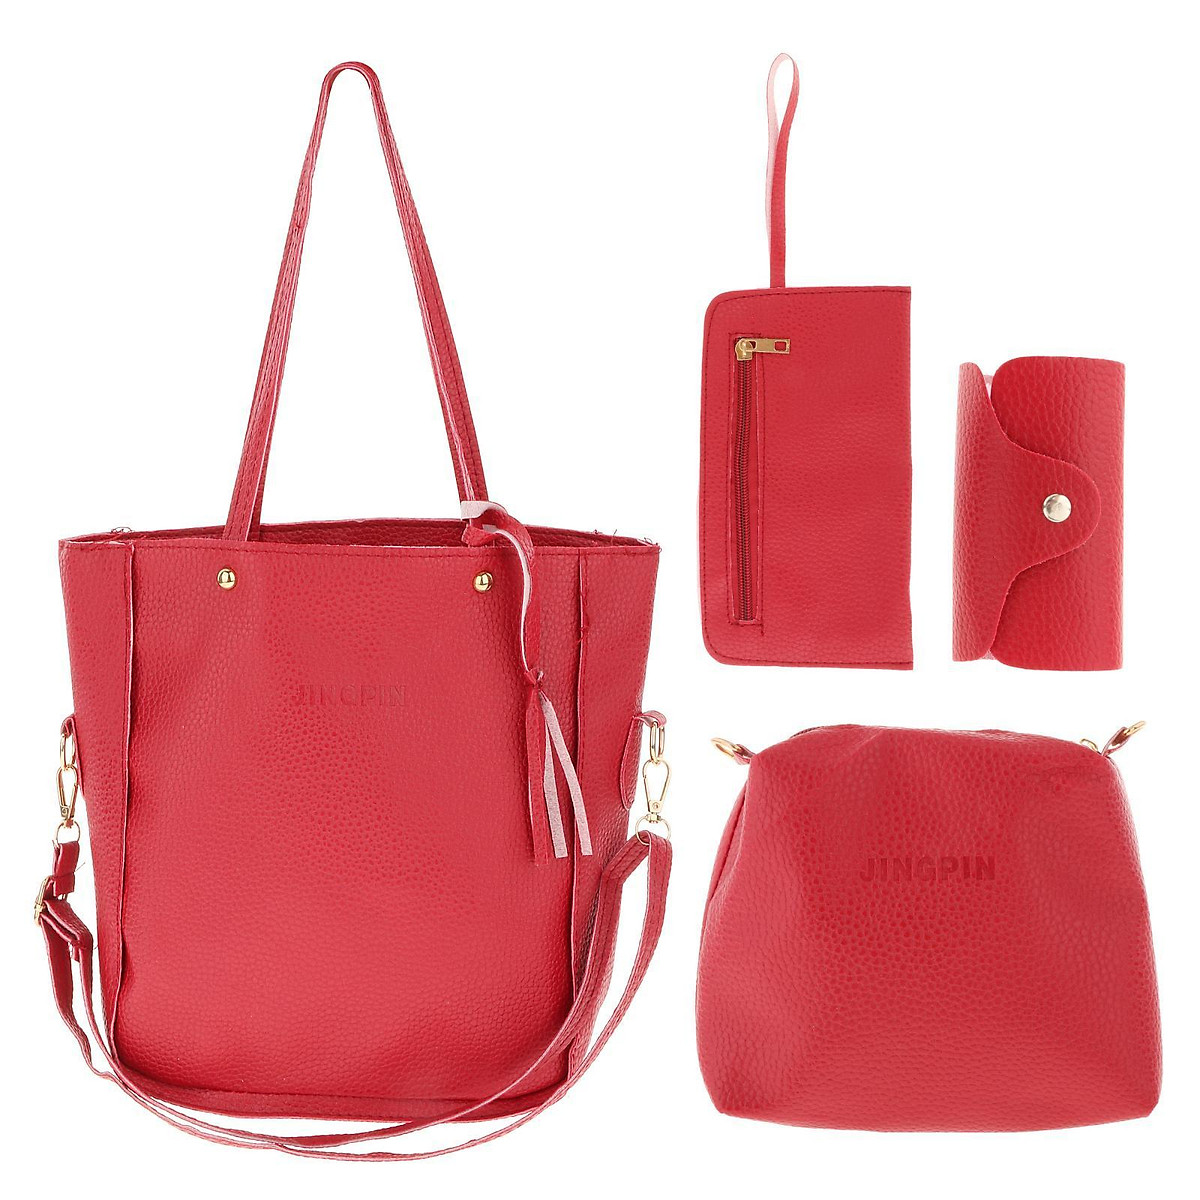 handbags online sri lanka | online handbags sri lanka | handbag price